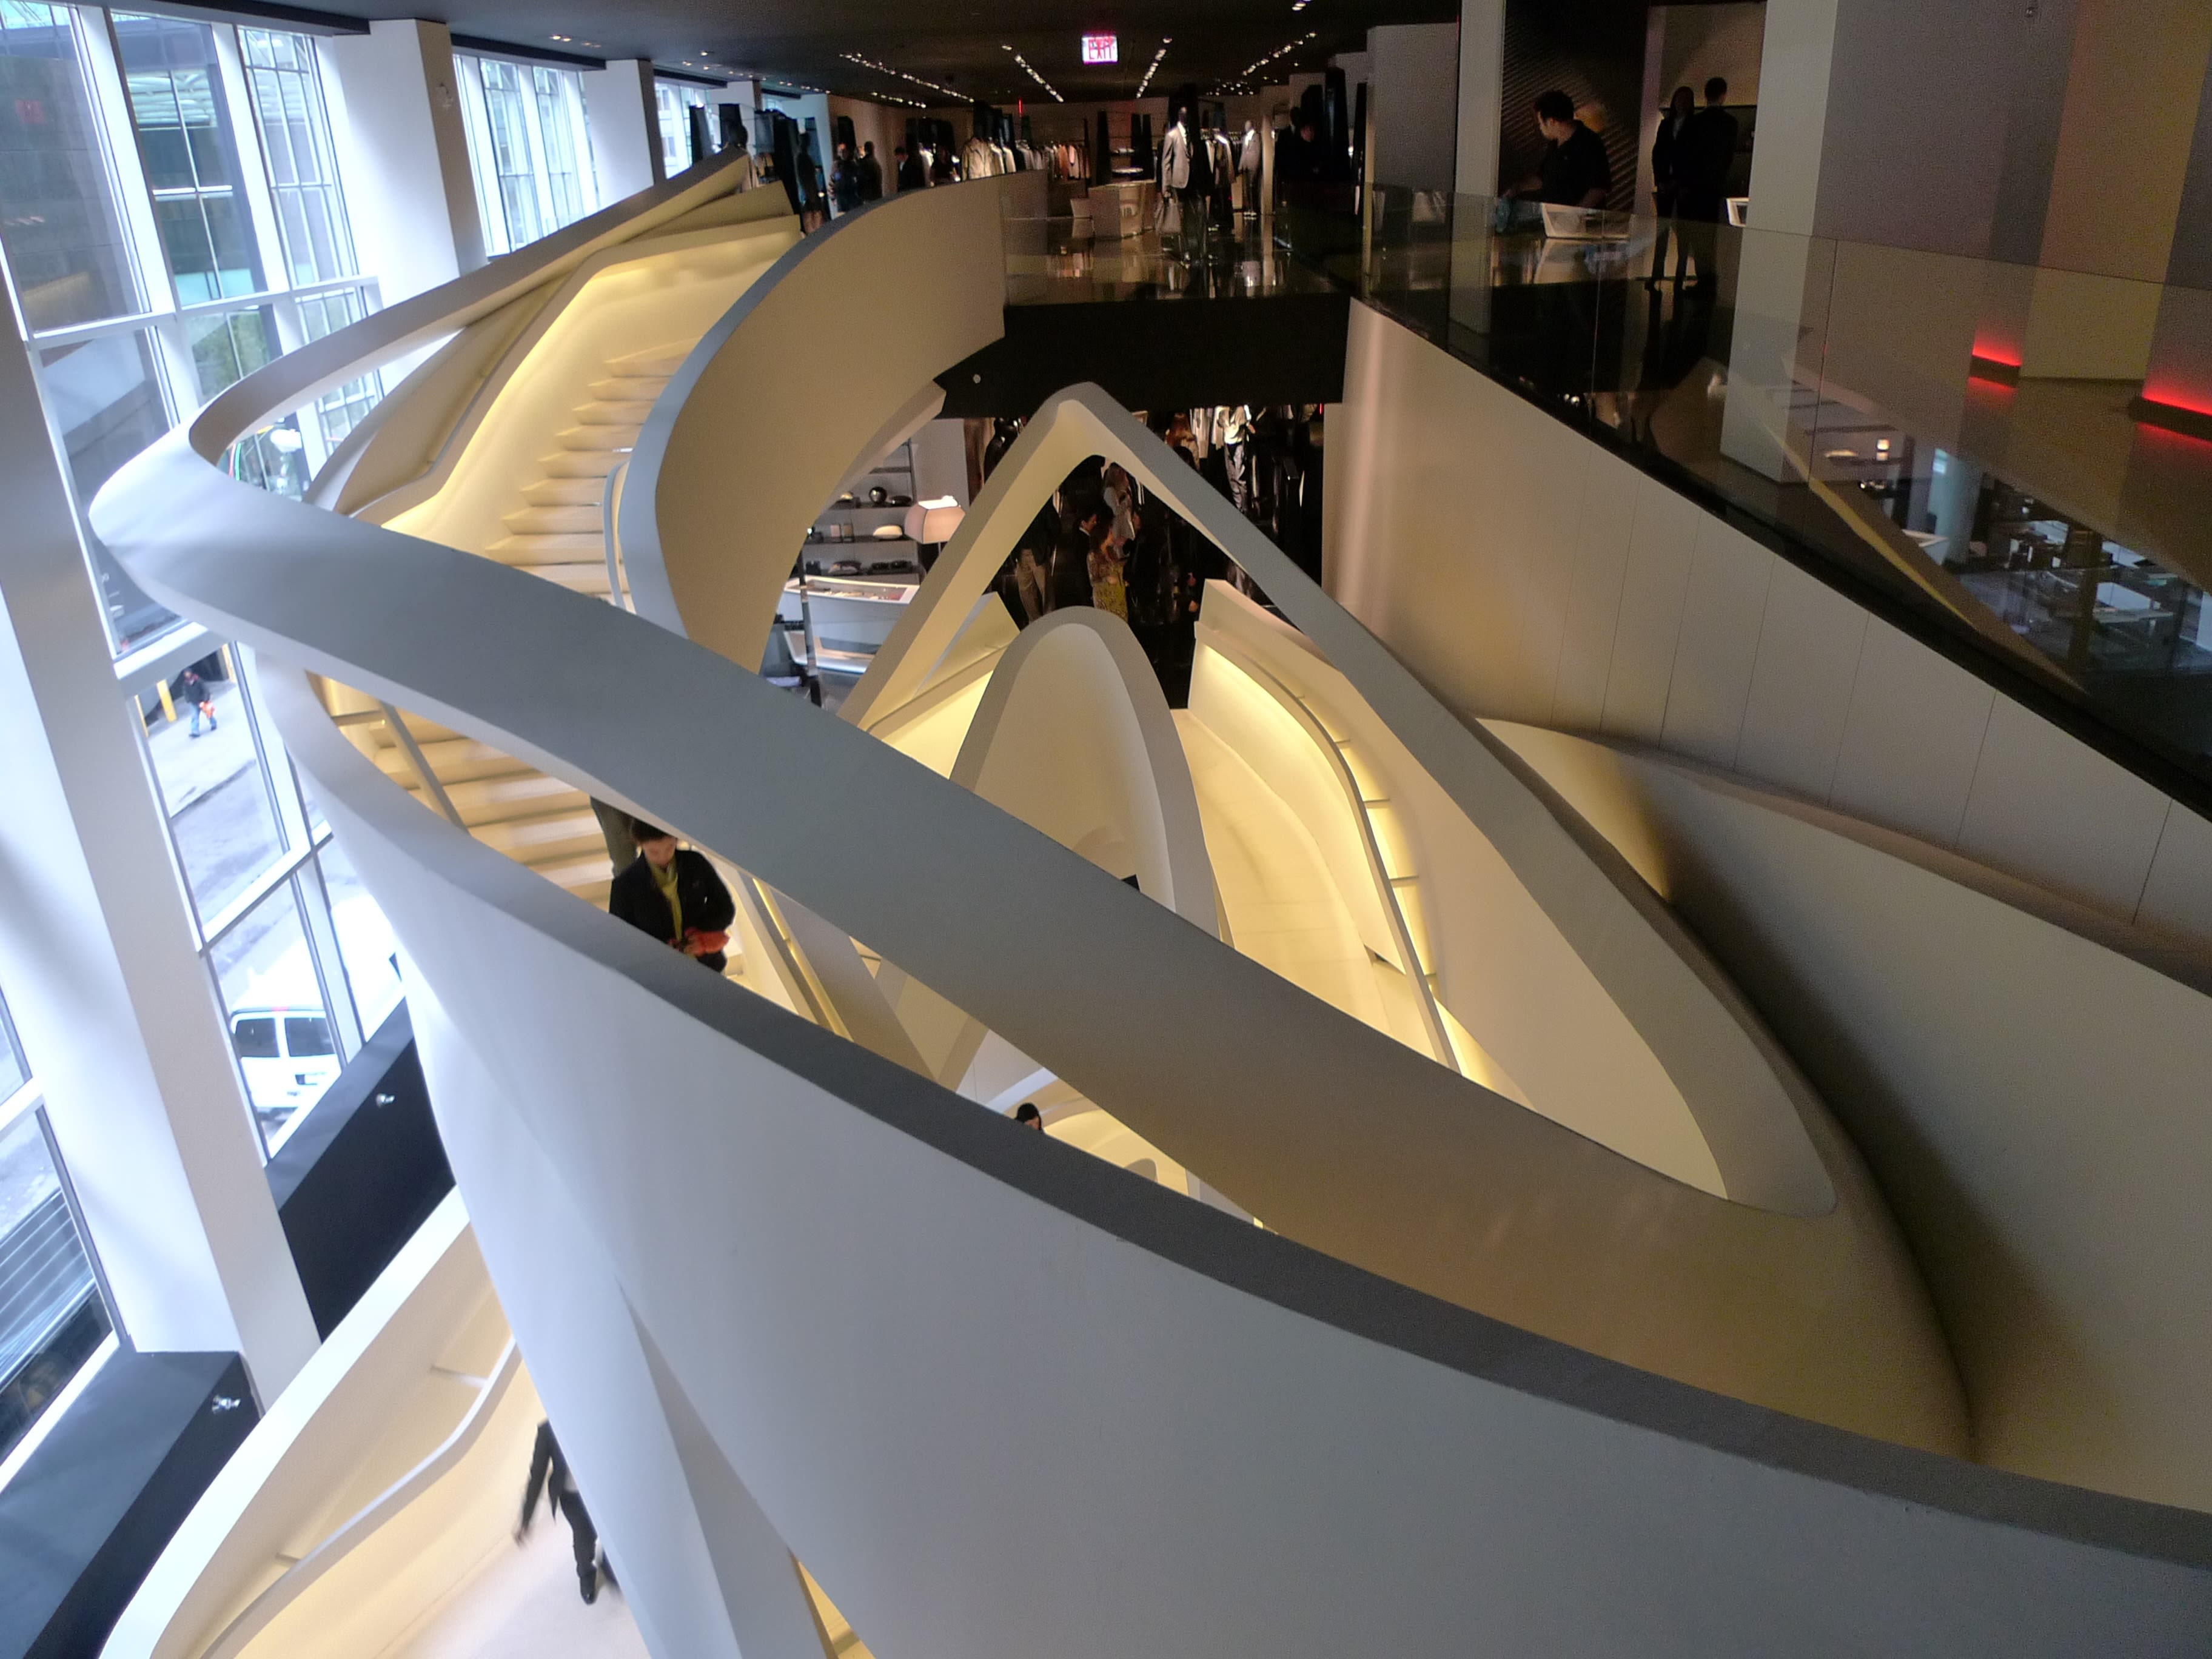 Inside Louis Vuitton's Townhouse: Wooing luxury shoppers in digital